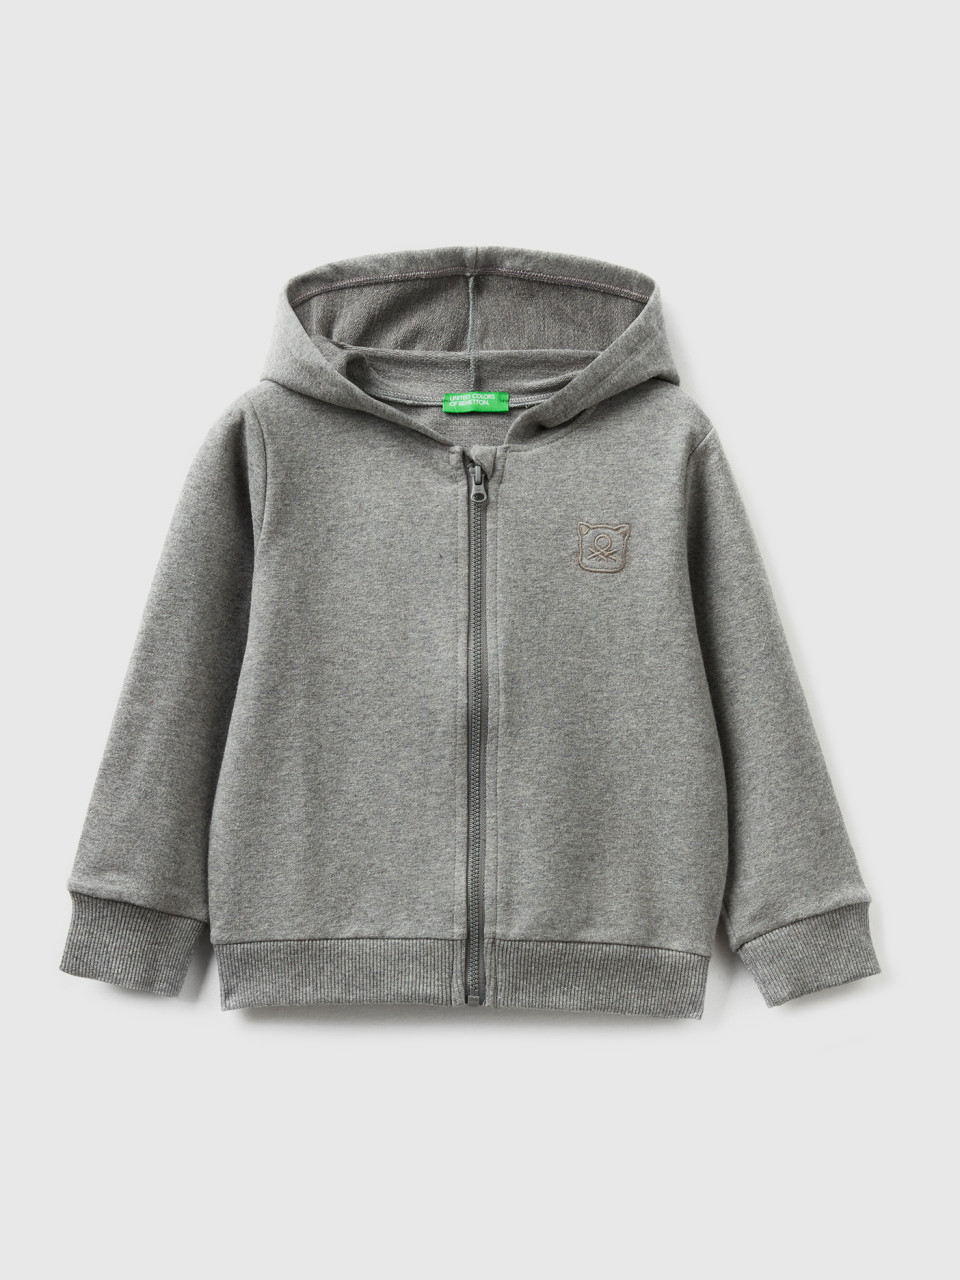 Benetton, Warm Sweatshirt With Zip And Embroidered Logo, Dark Gray, Kids